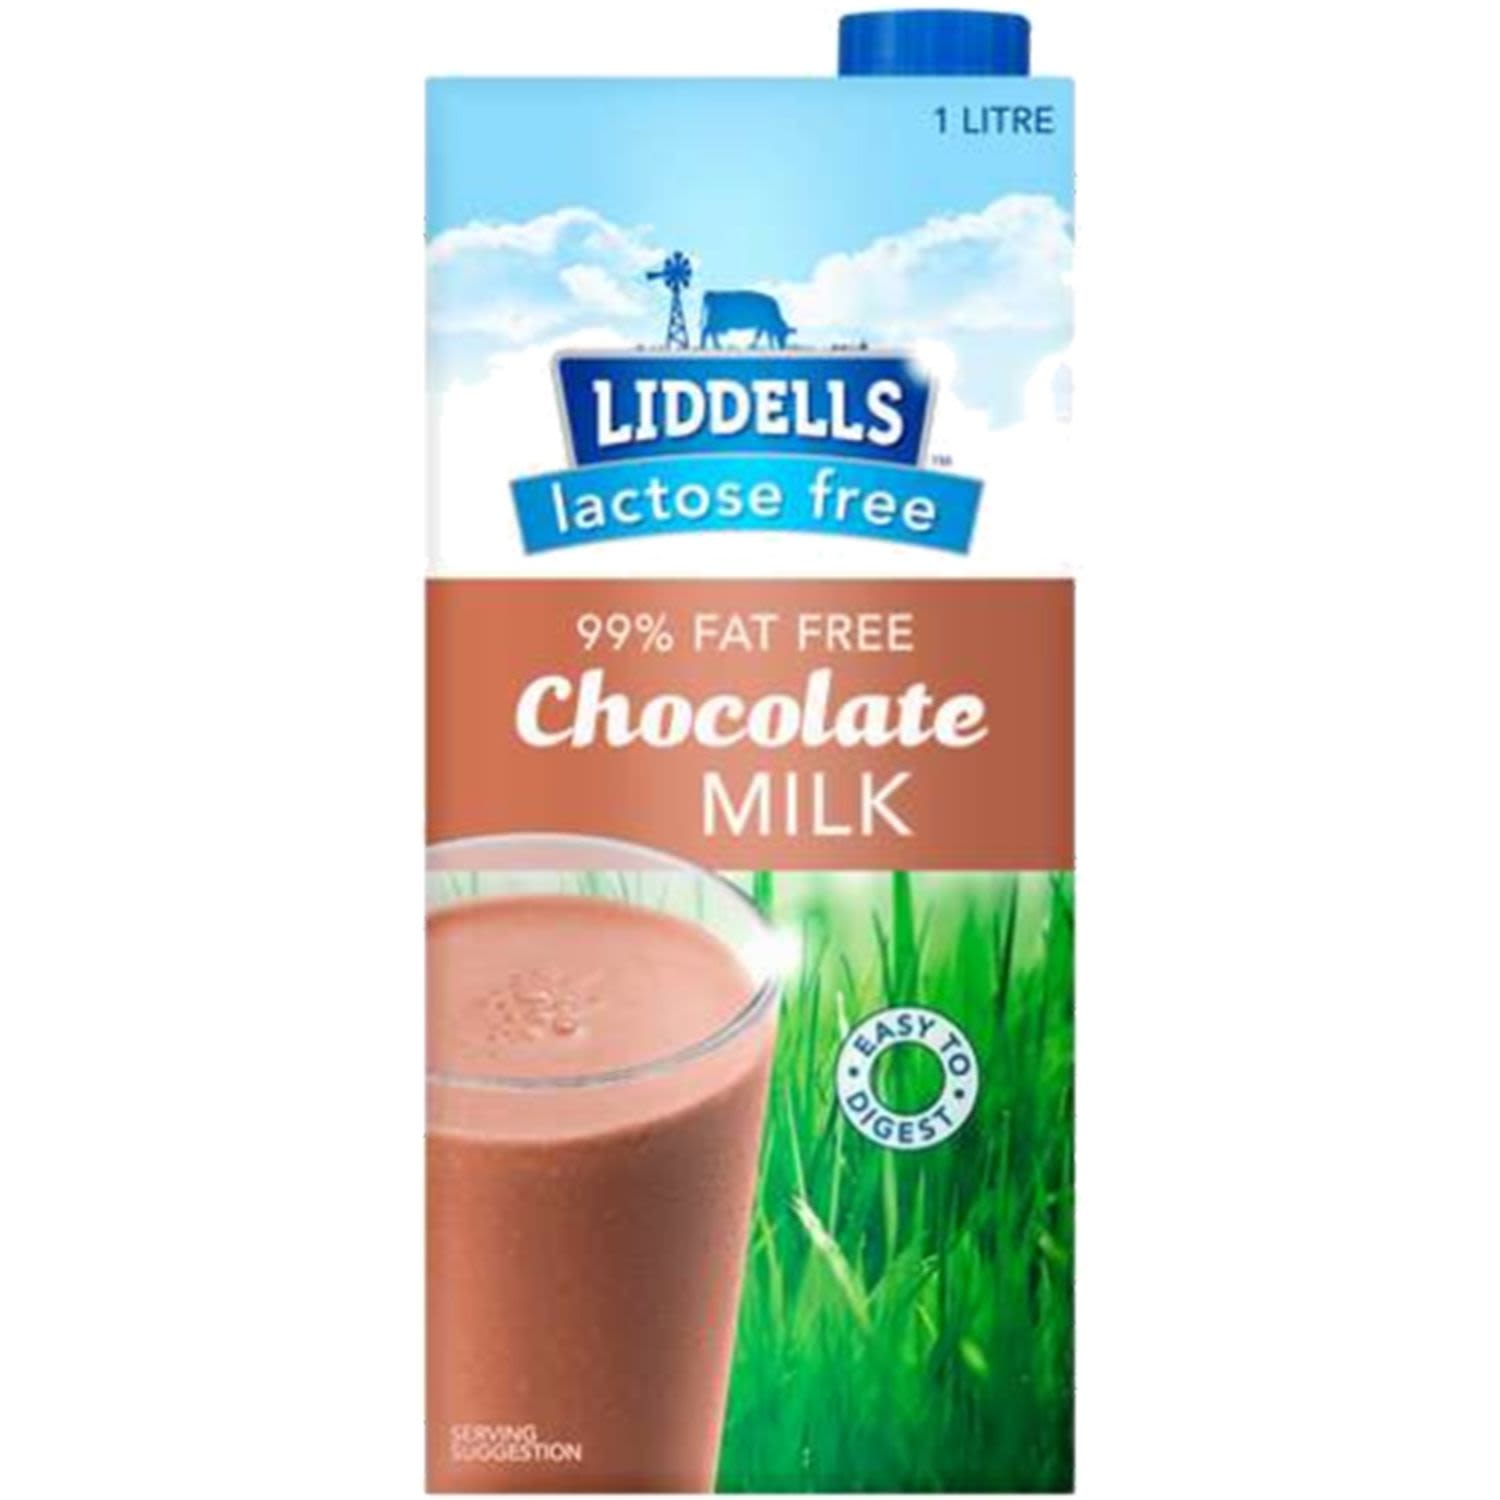 Liddells Lactose Free Chocolate Milk, 1 Litre